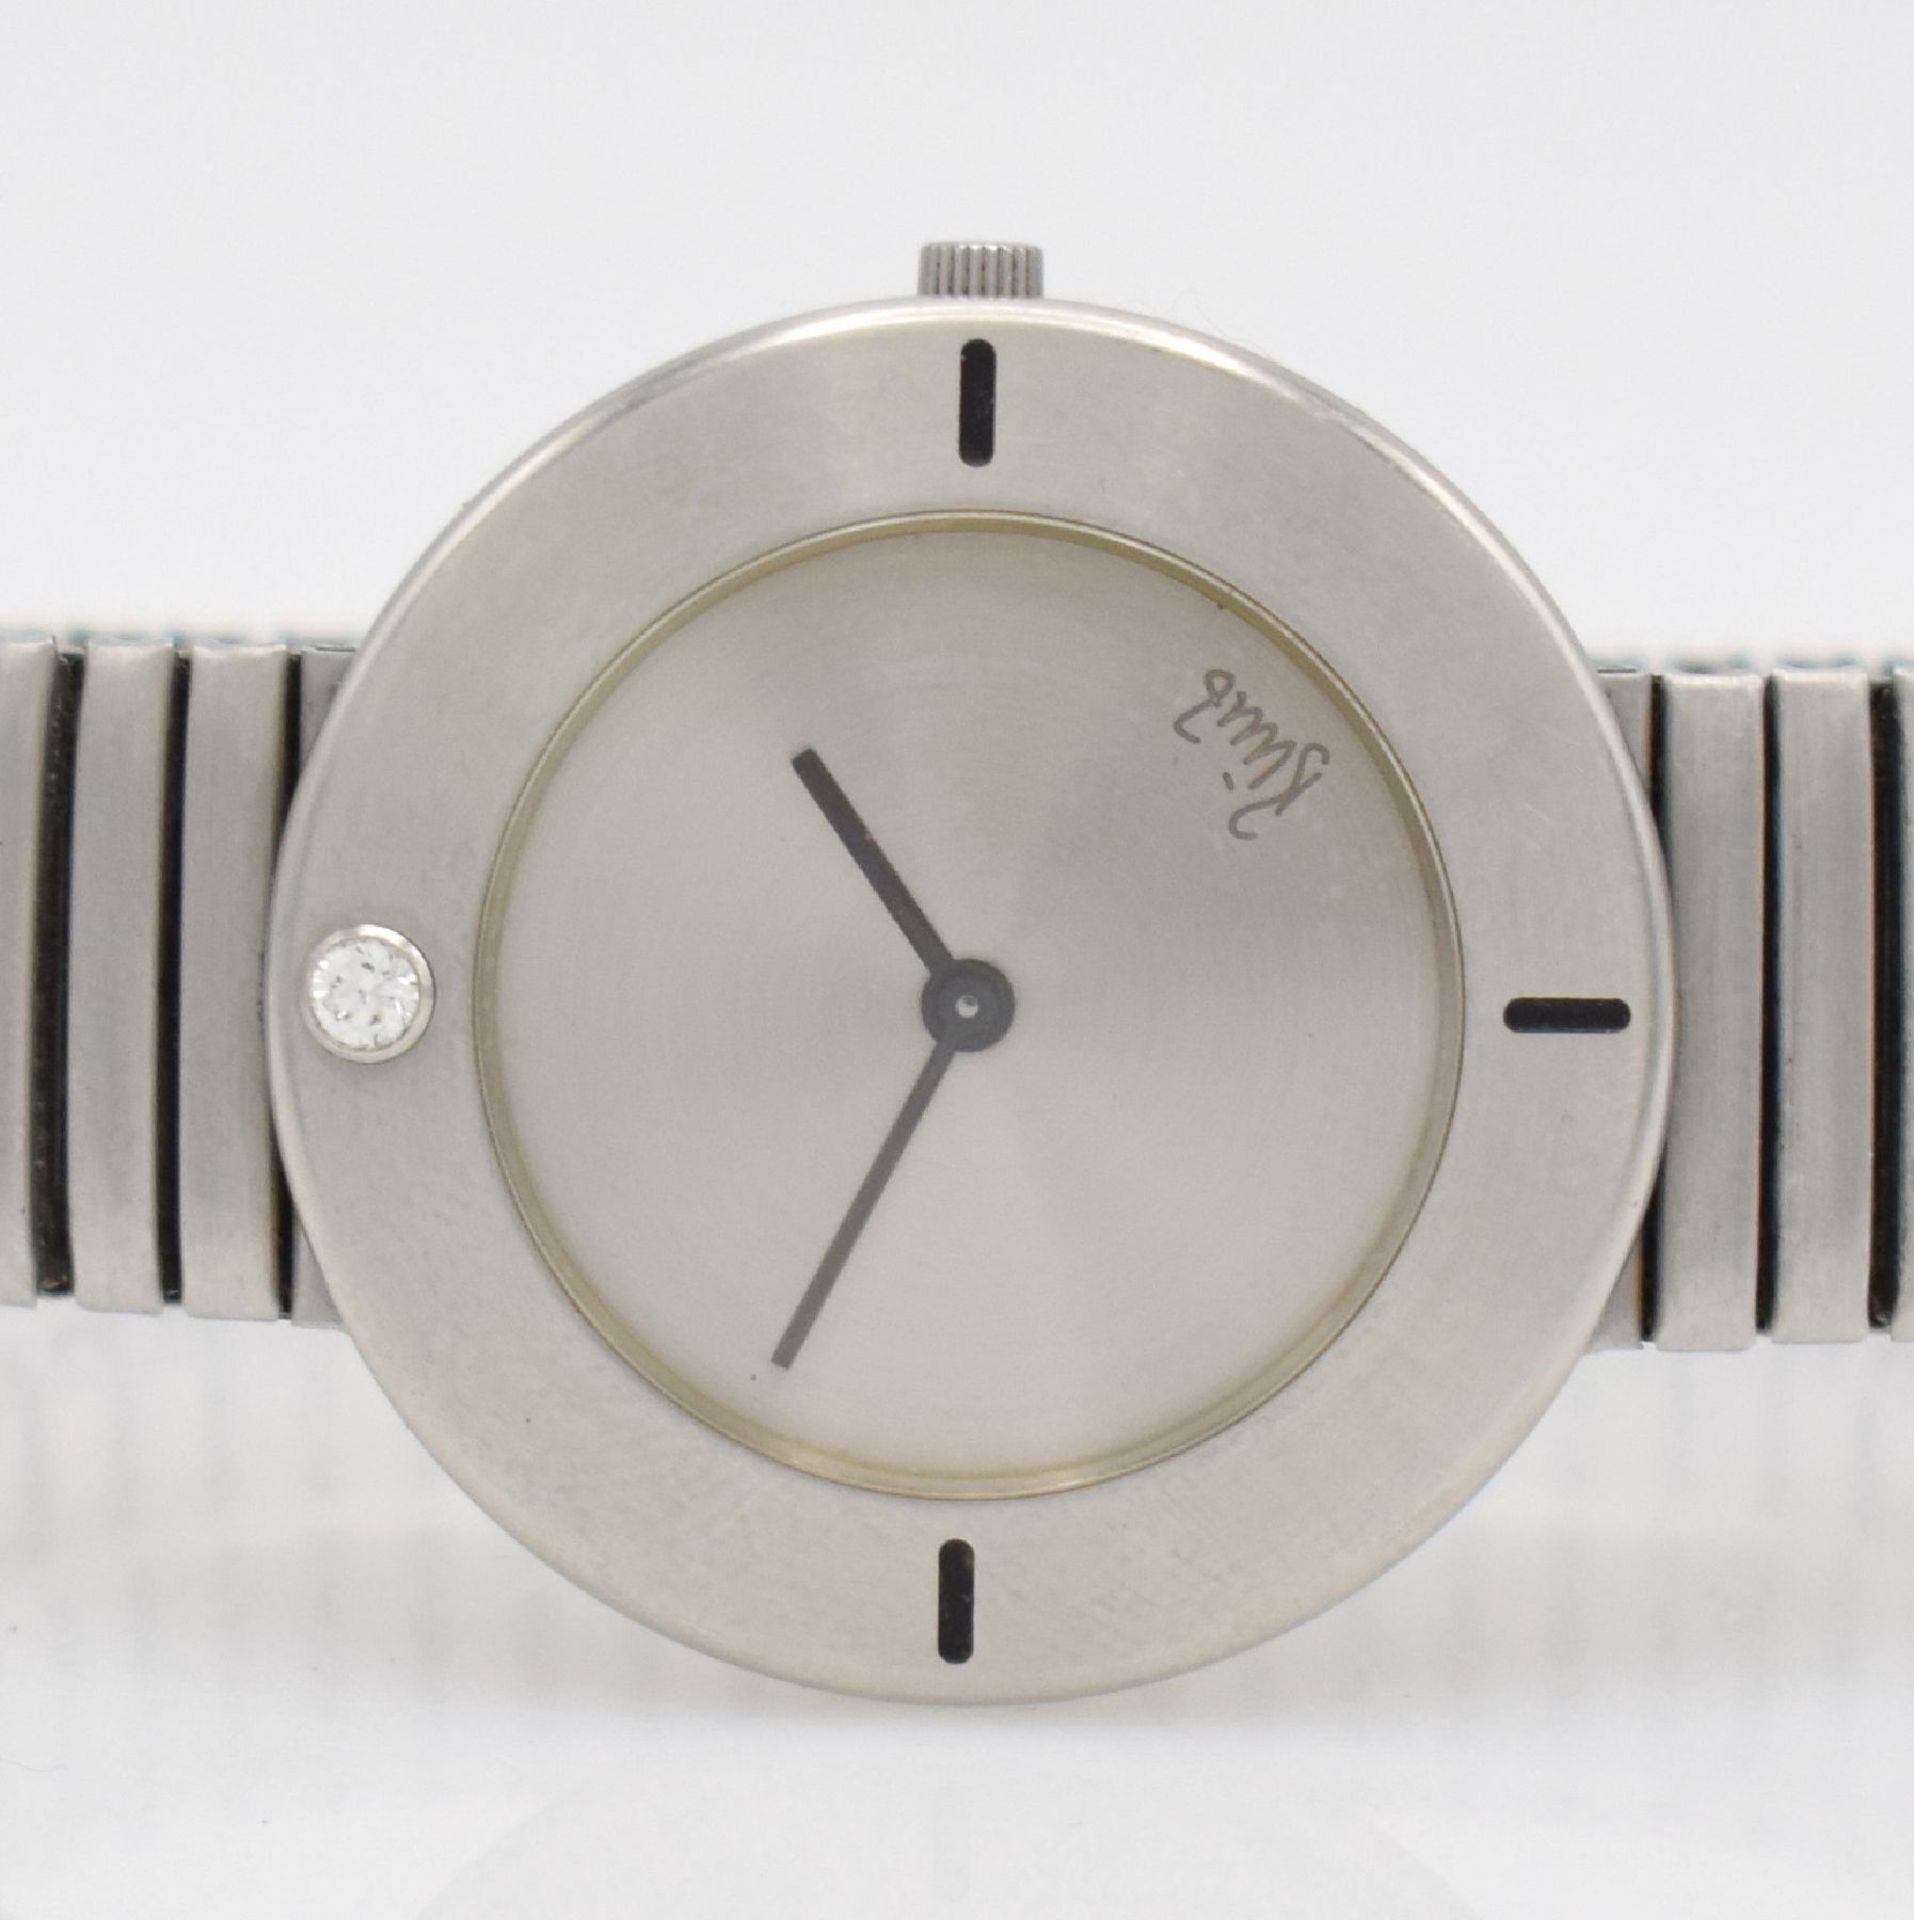 BUNZ wristwatch in stainless steel with diamond, Switzerland sold according to papers in November - Bild 2 aus 8